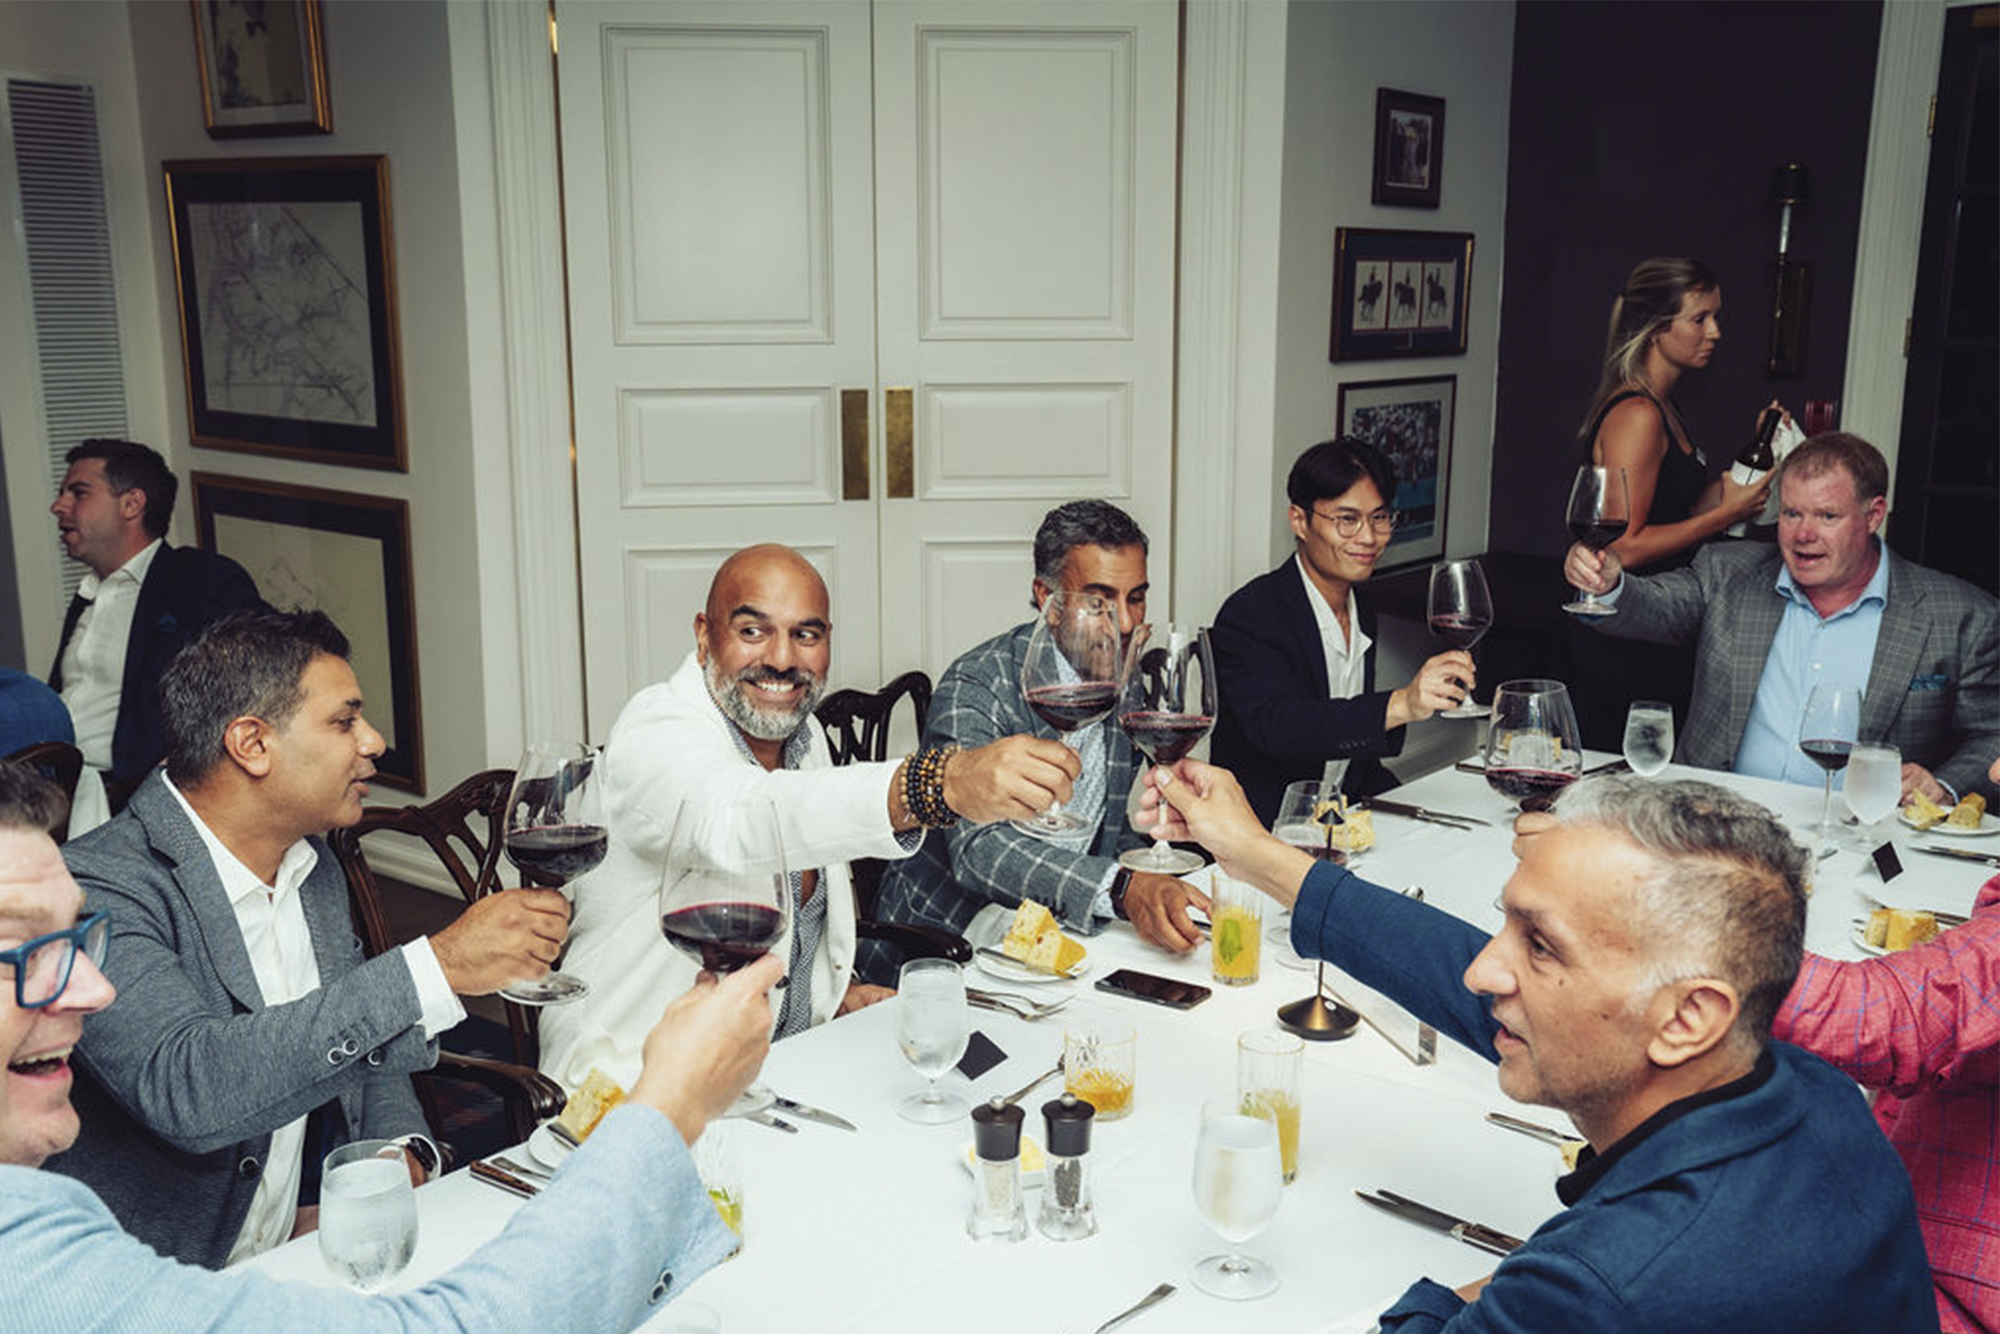 guest dinner during Sharp x Mercedes-AMG Redtail Golf Club event